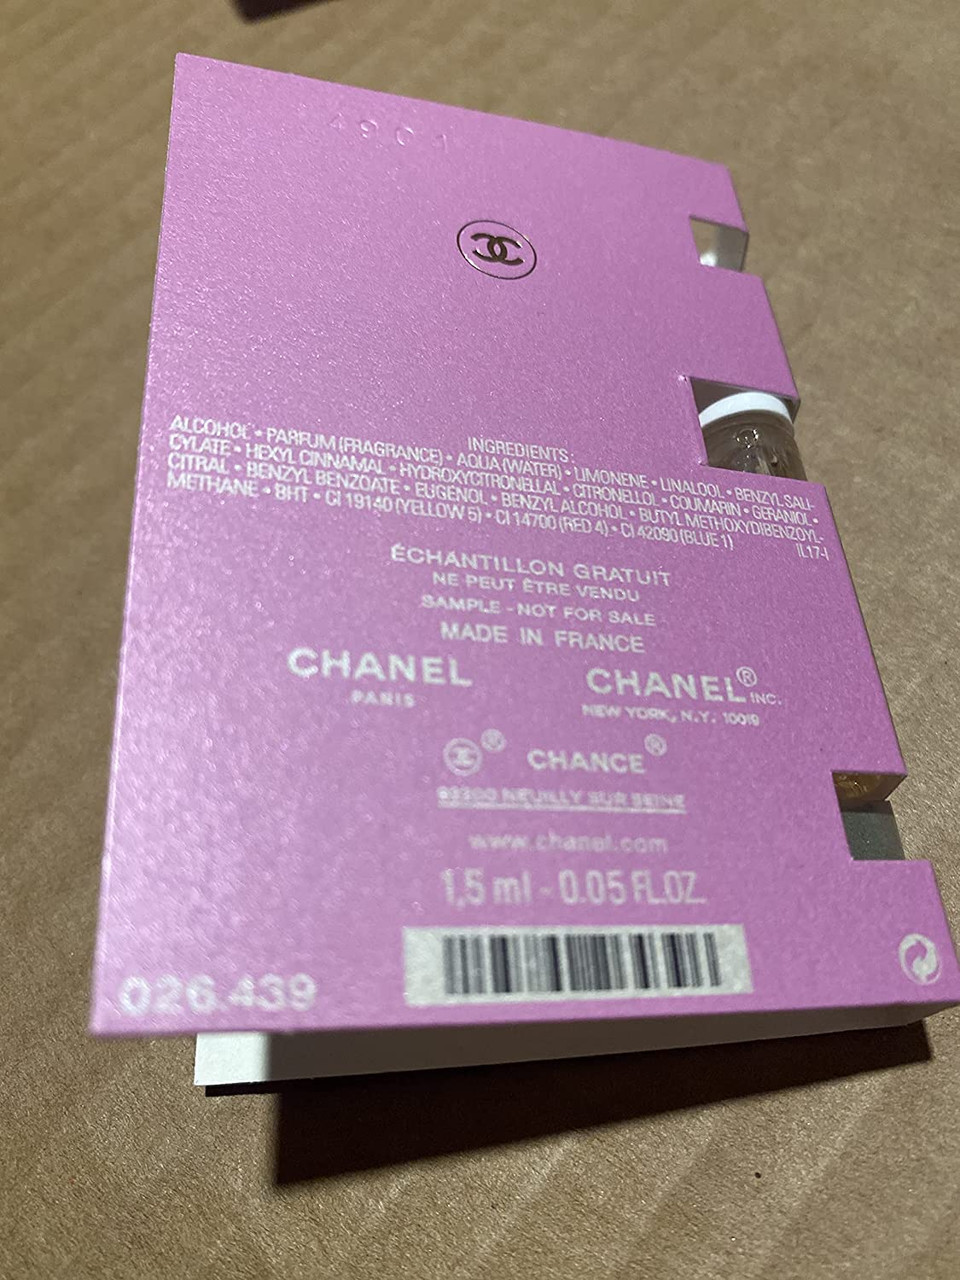 2 x Chanel Chance Eau Tendre EDP Eau de Parfum Spray Sample 1.5ml